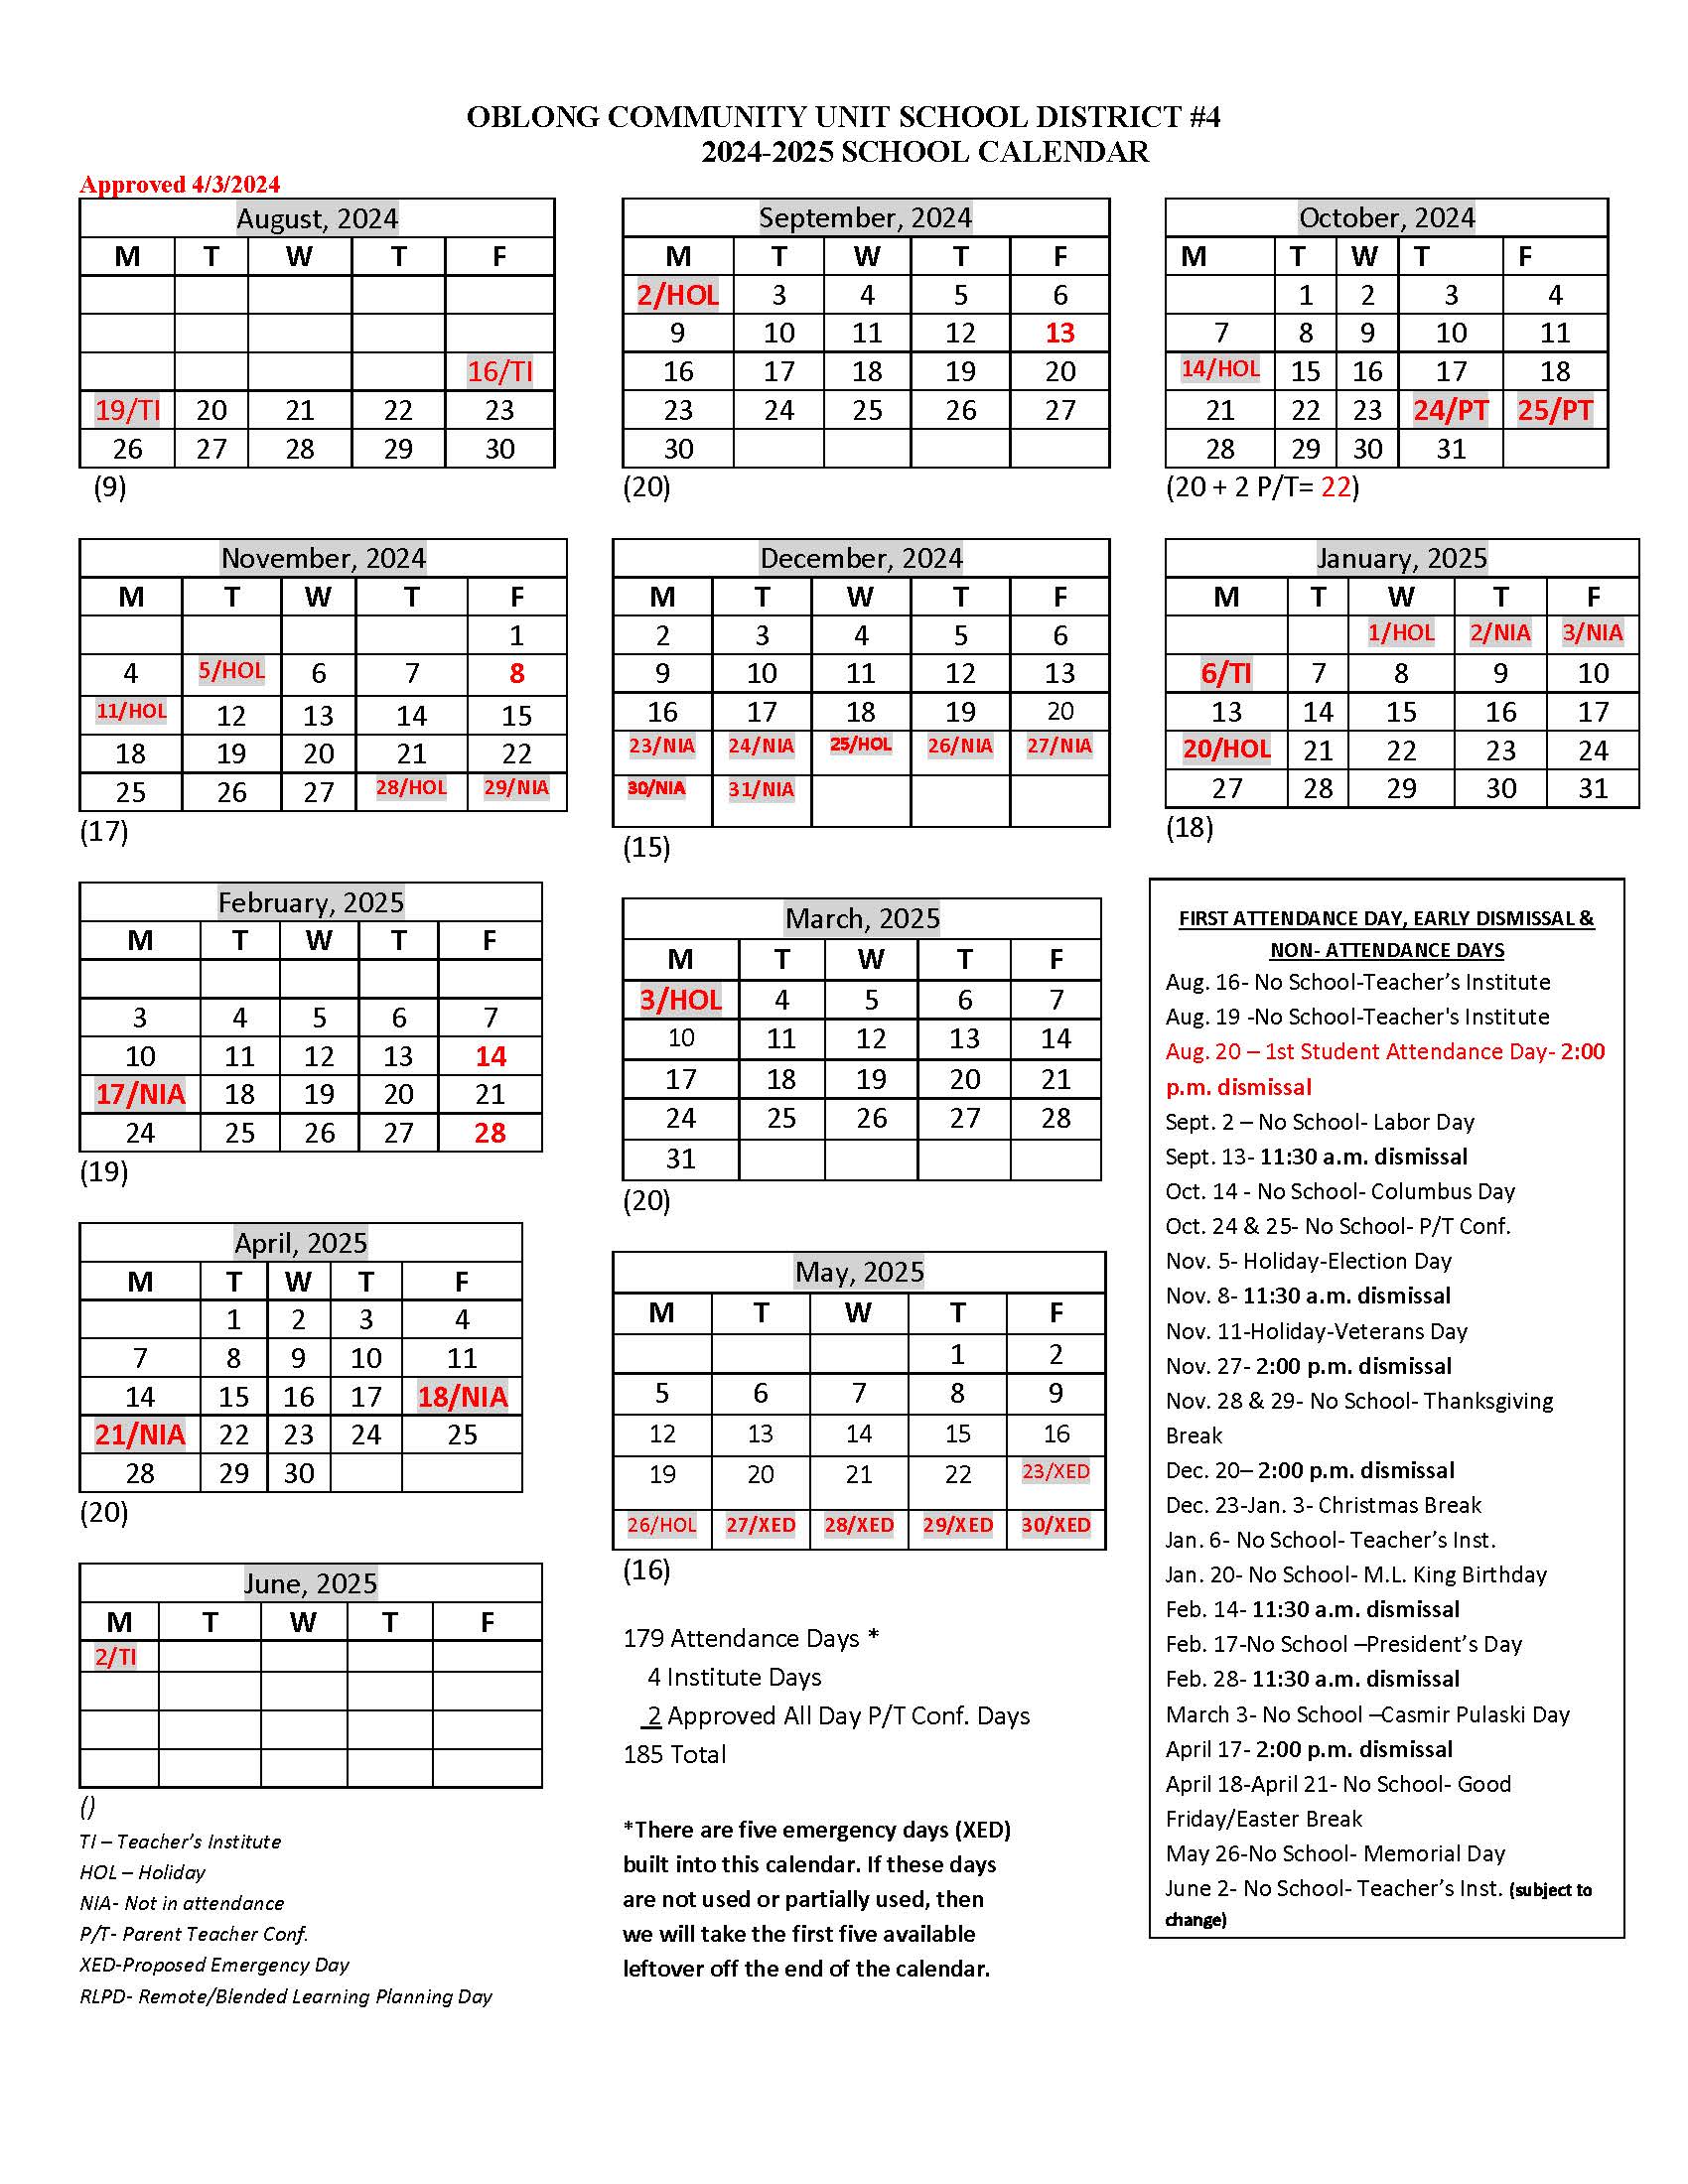 2024-25 school calendar